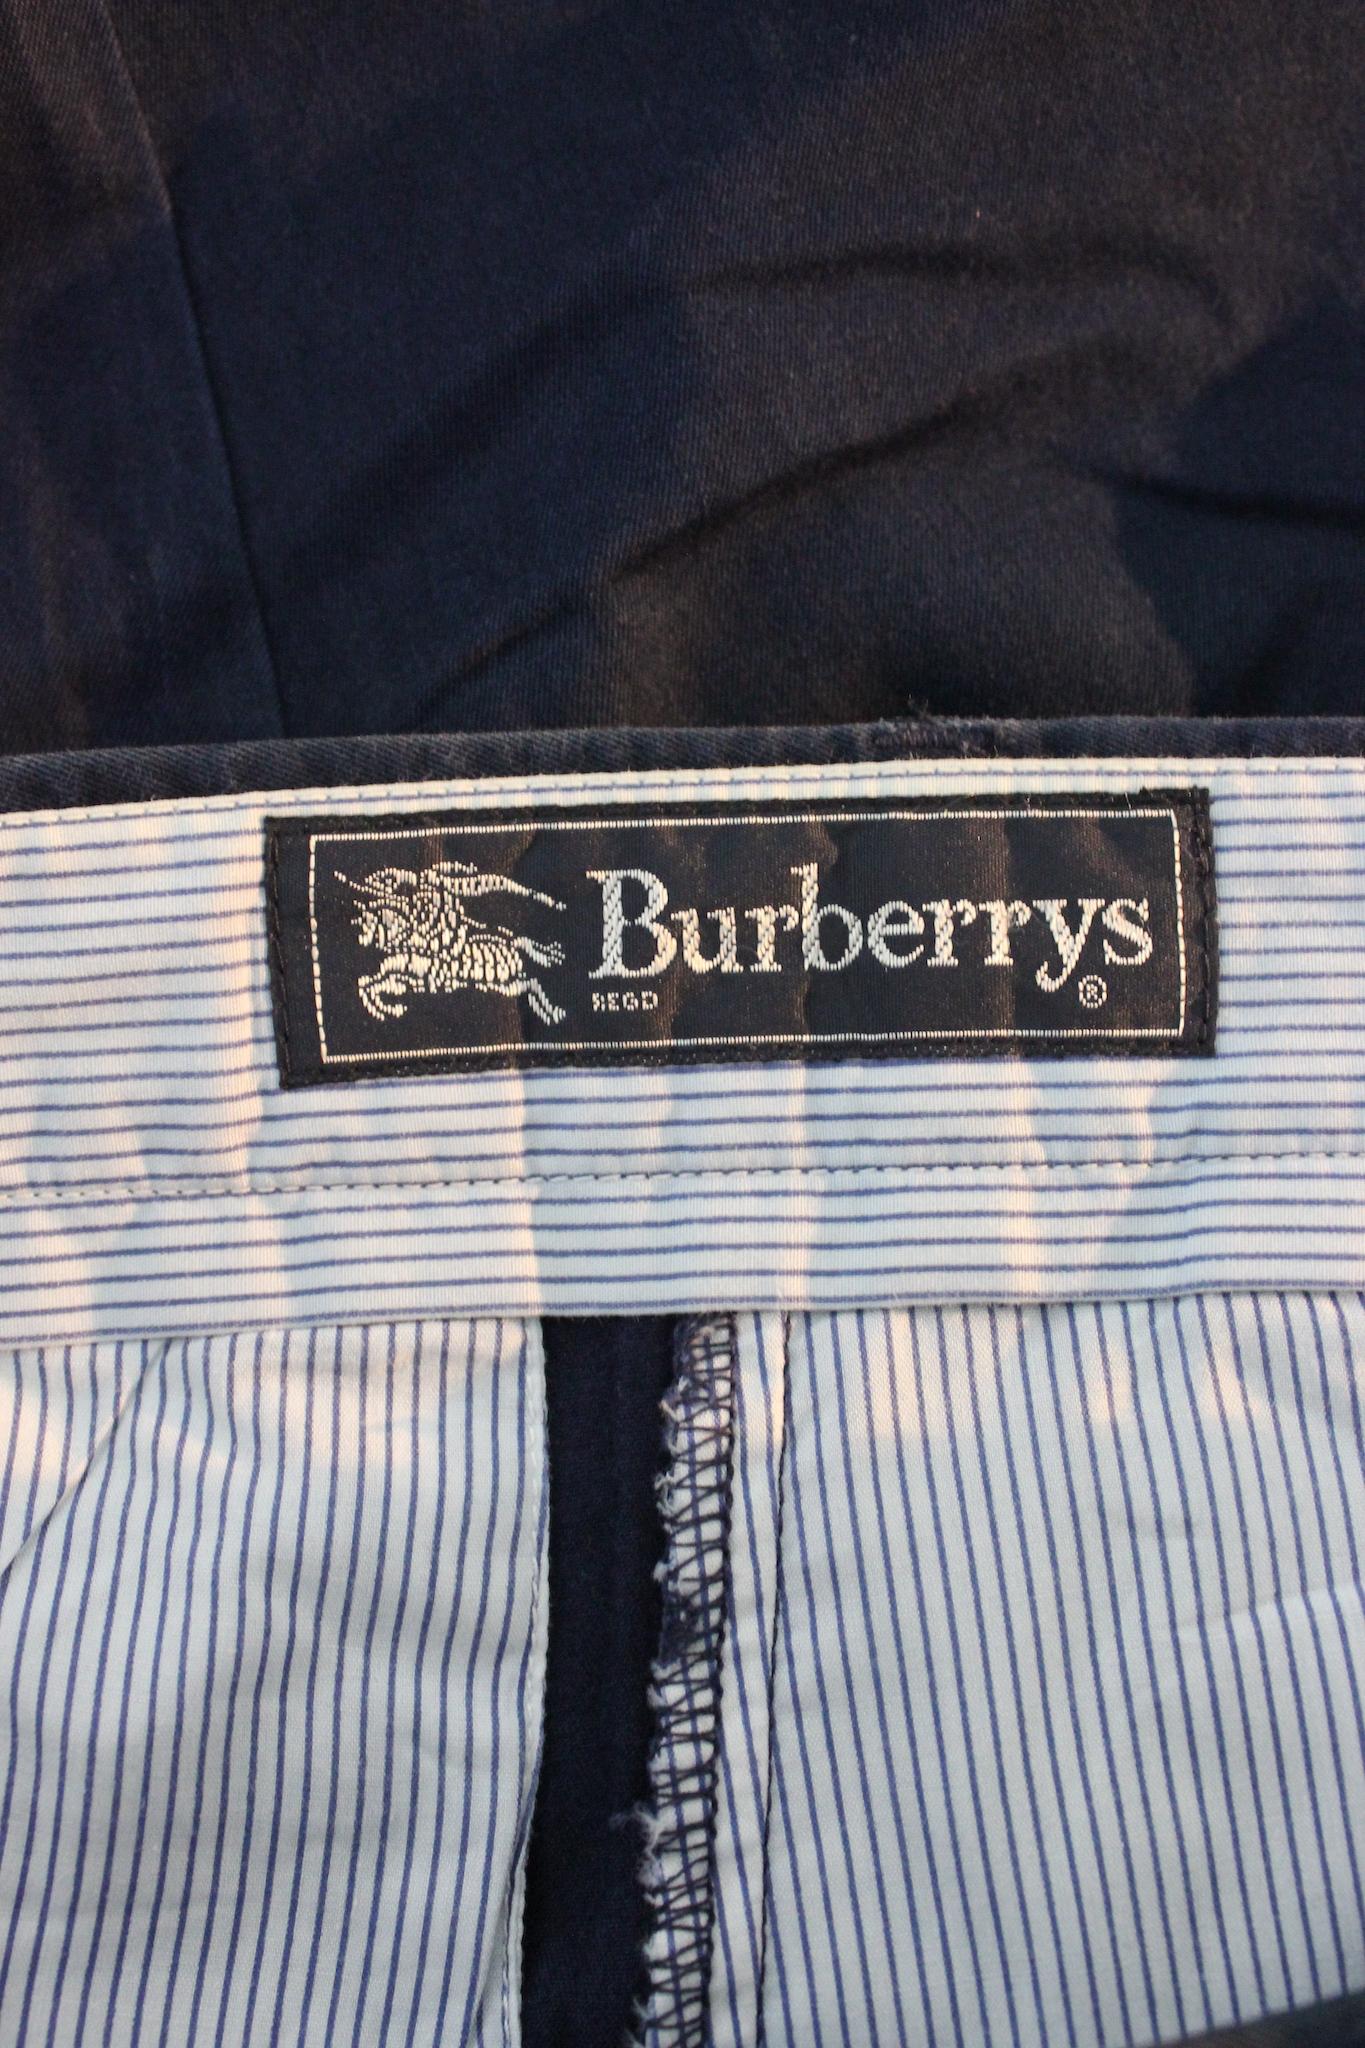 Burberry classic vintage 90s blue pants. Blue color, button and zip closure, 100% cotton fabric. Made in Italy.

Size: 58 It 48 Us 48 Uk

Waist: 50 cm
Length: 125 cm
Hem: 22 cm
Pant crotch: 98 cm